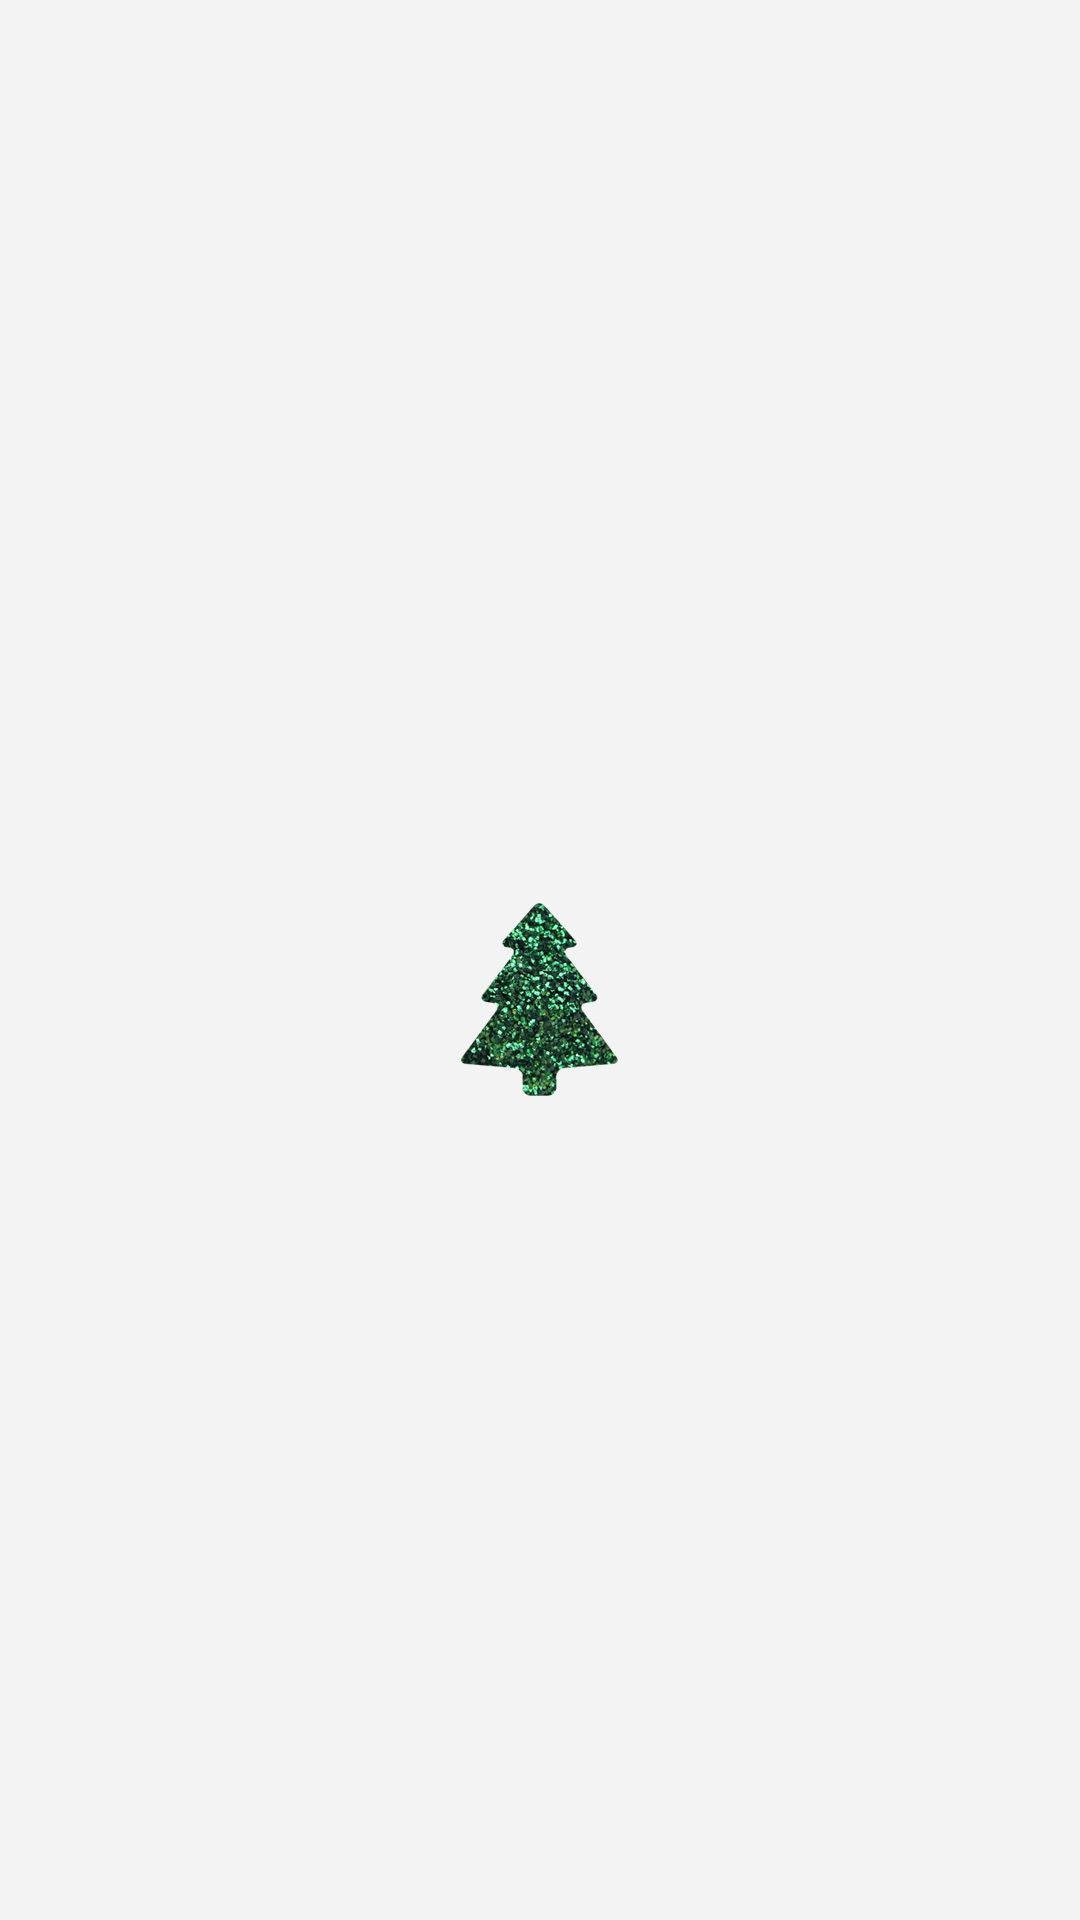 Simple Cute Christmas Iphone Single Tree